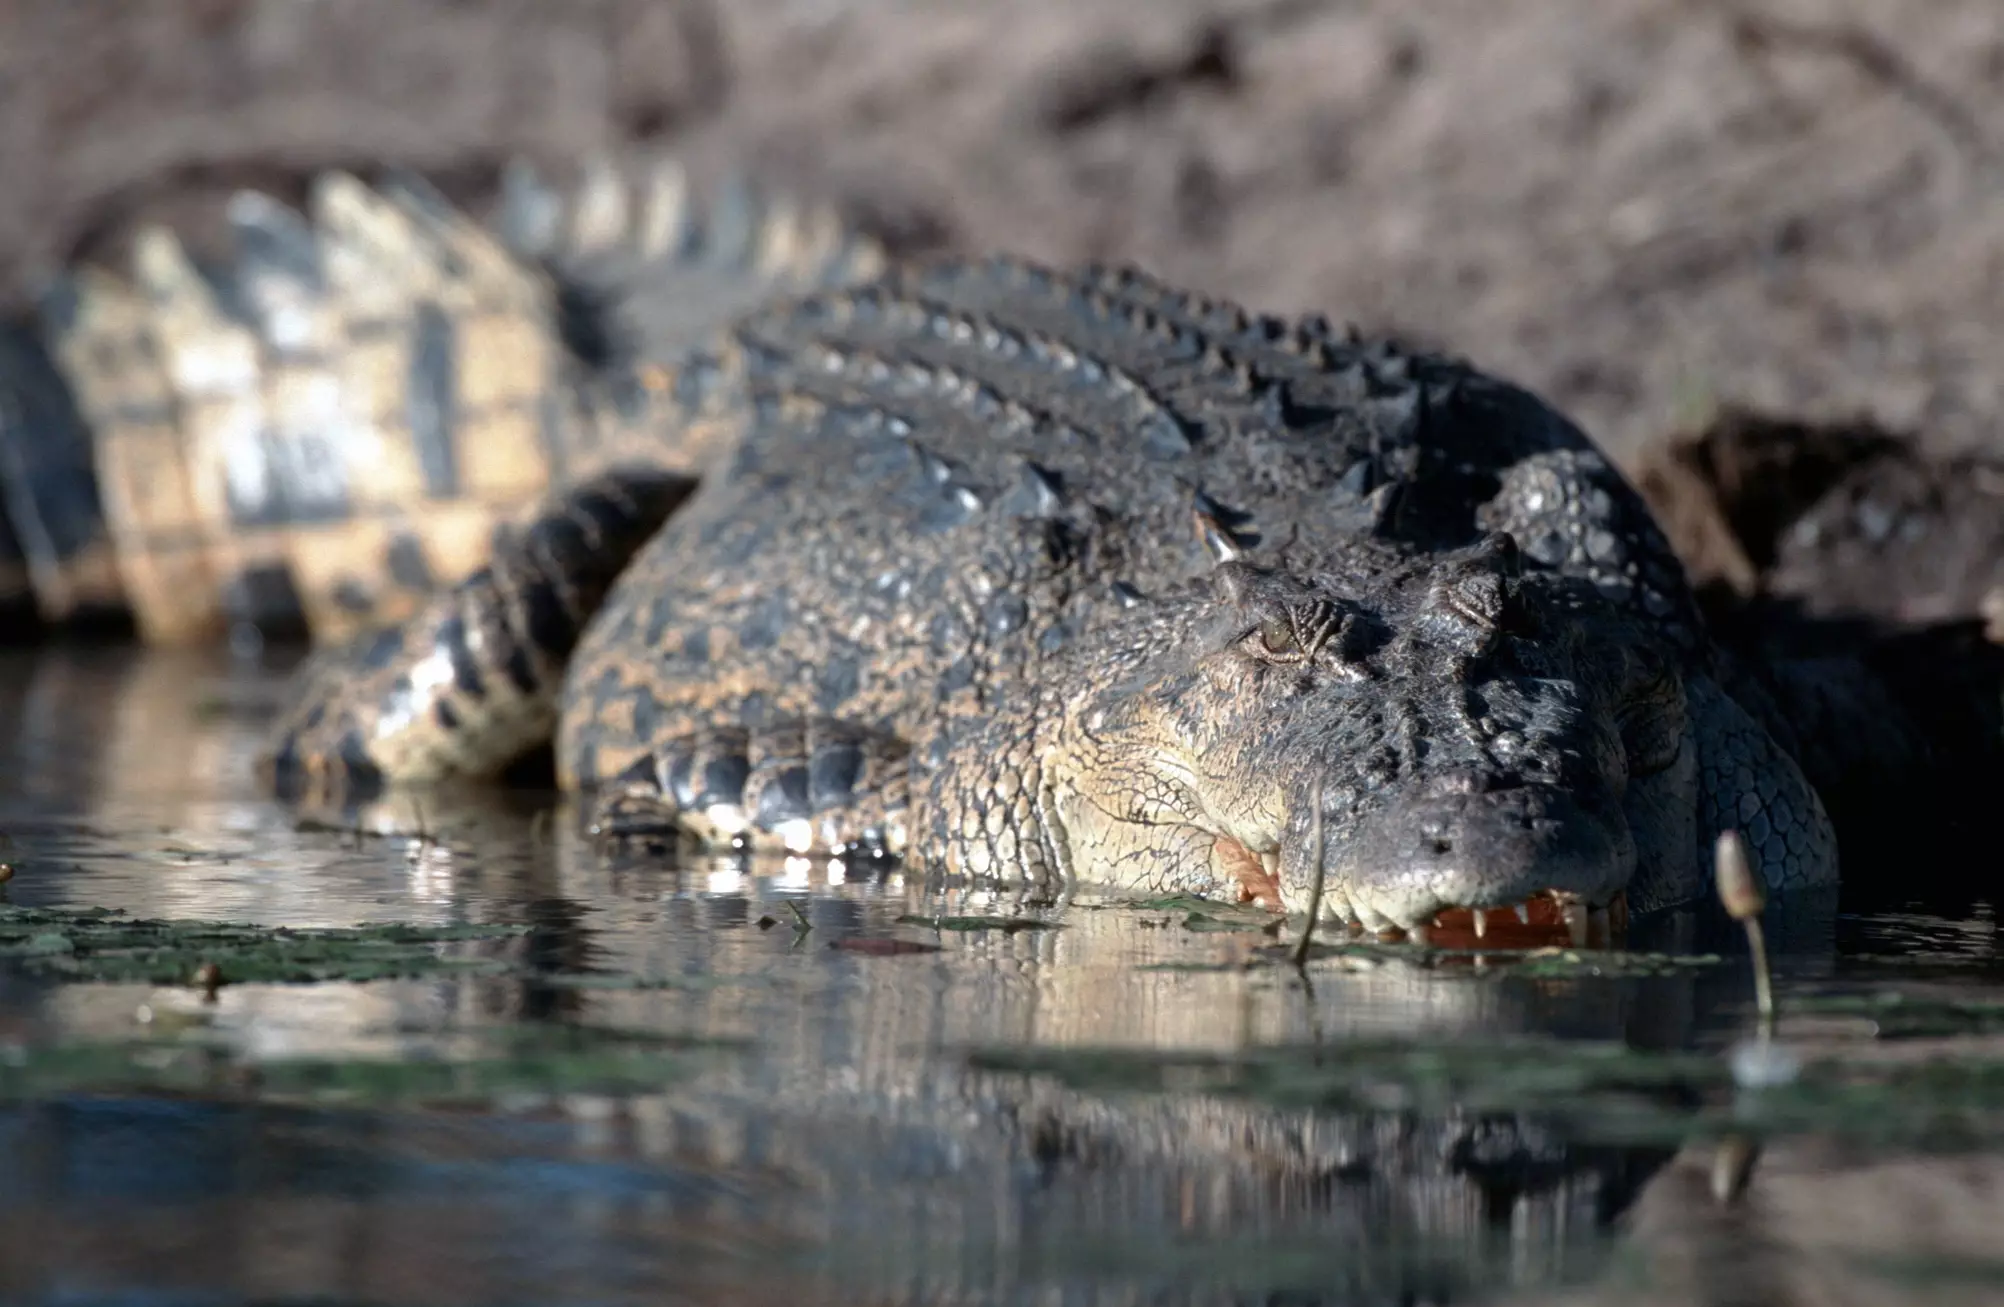 Saltwater crocodiles can swim up to 29 km per hour.